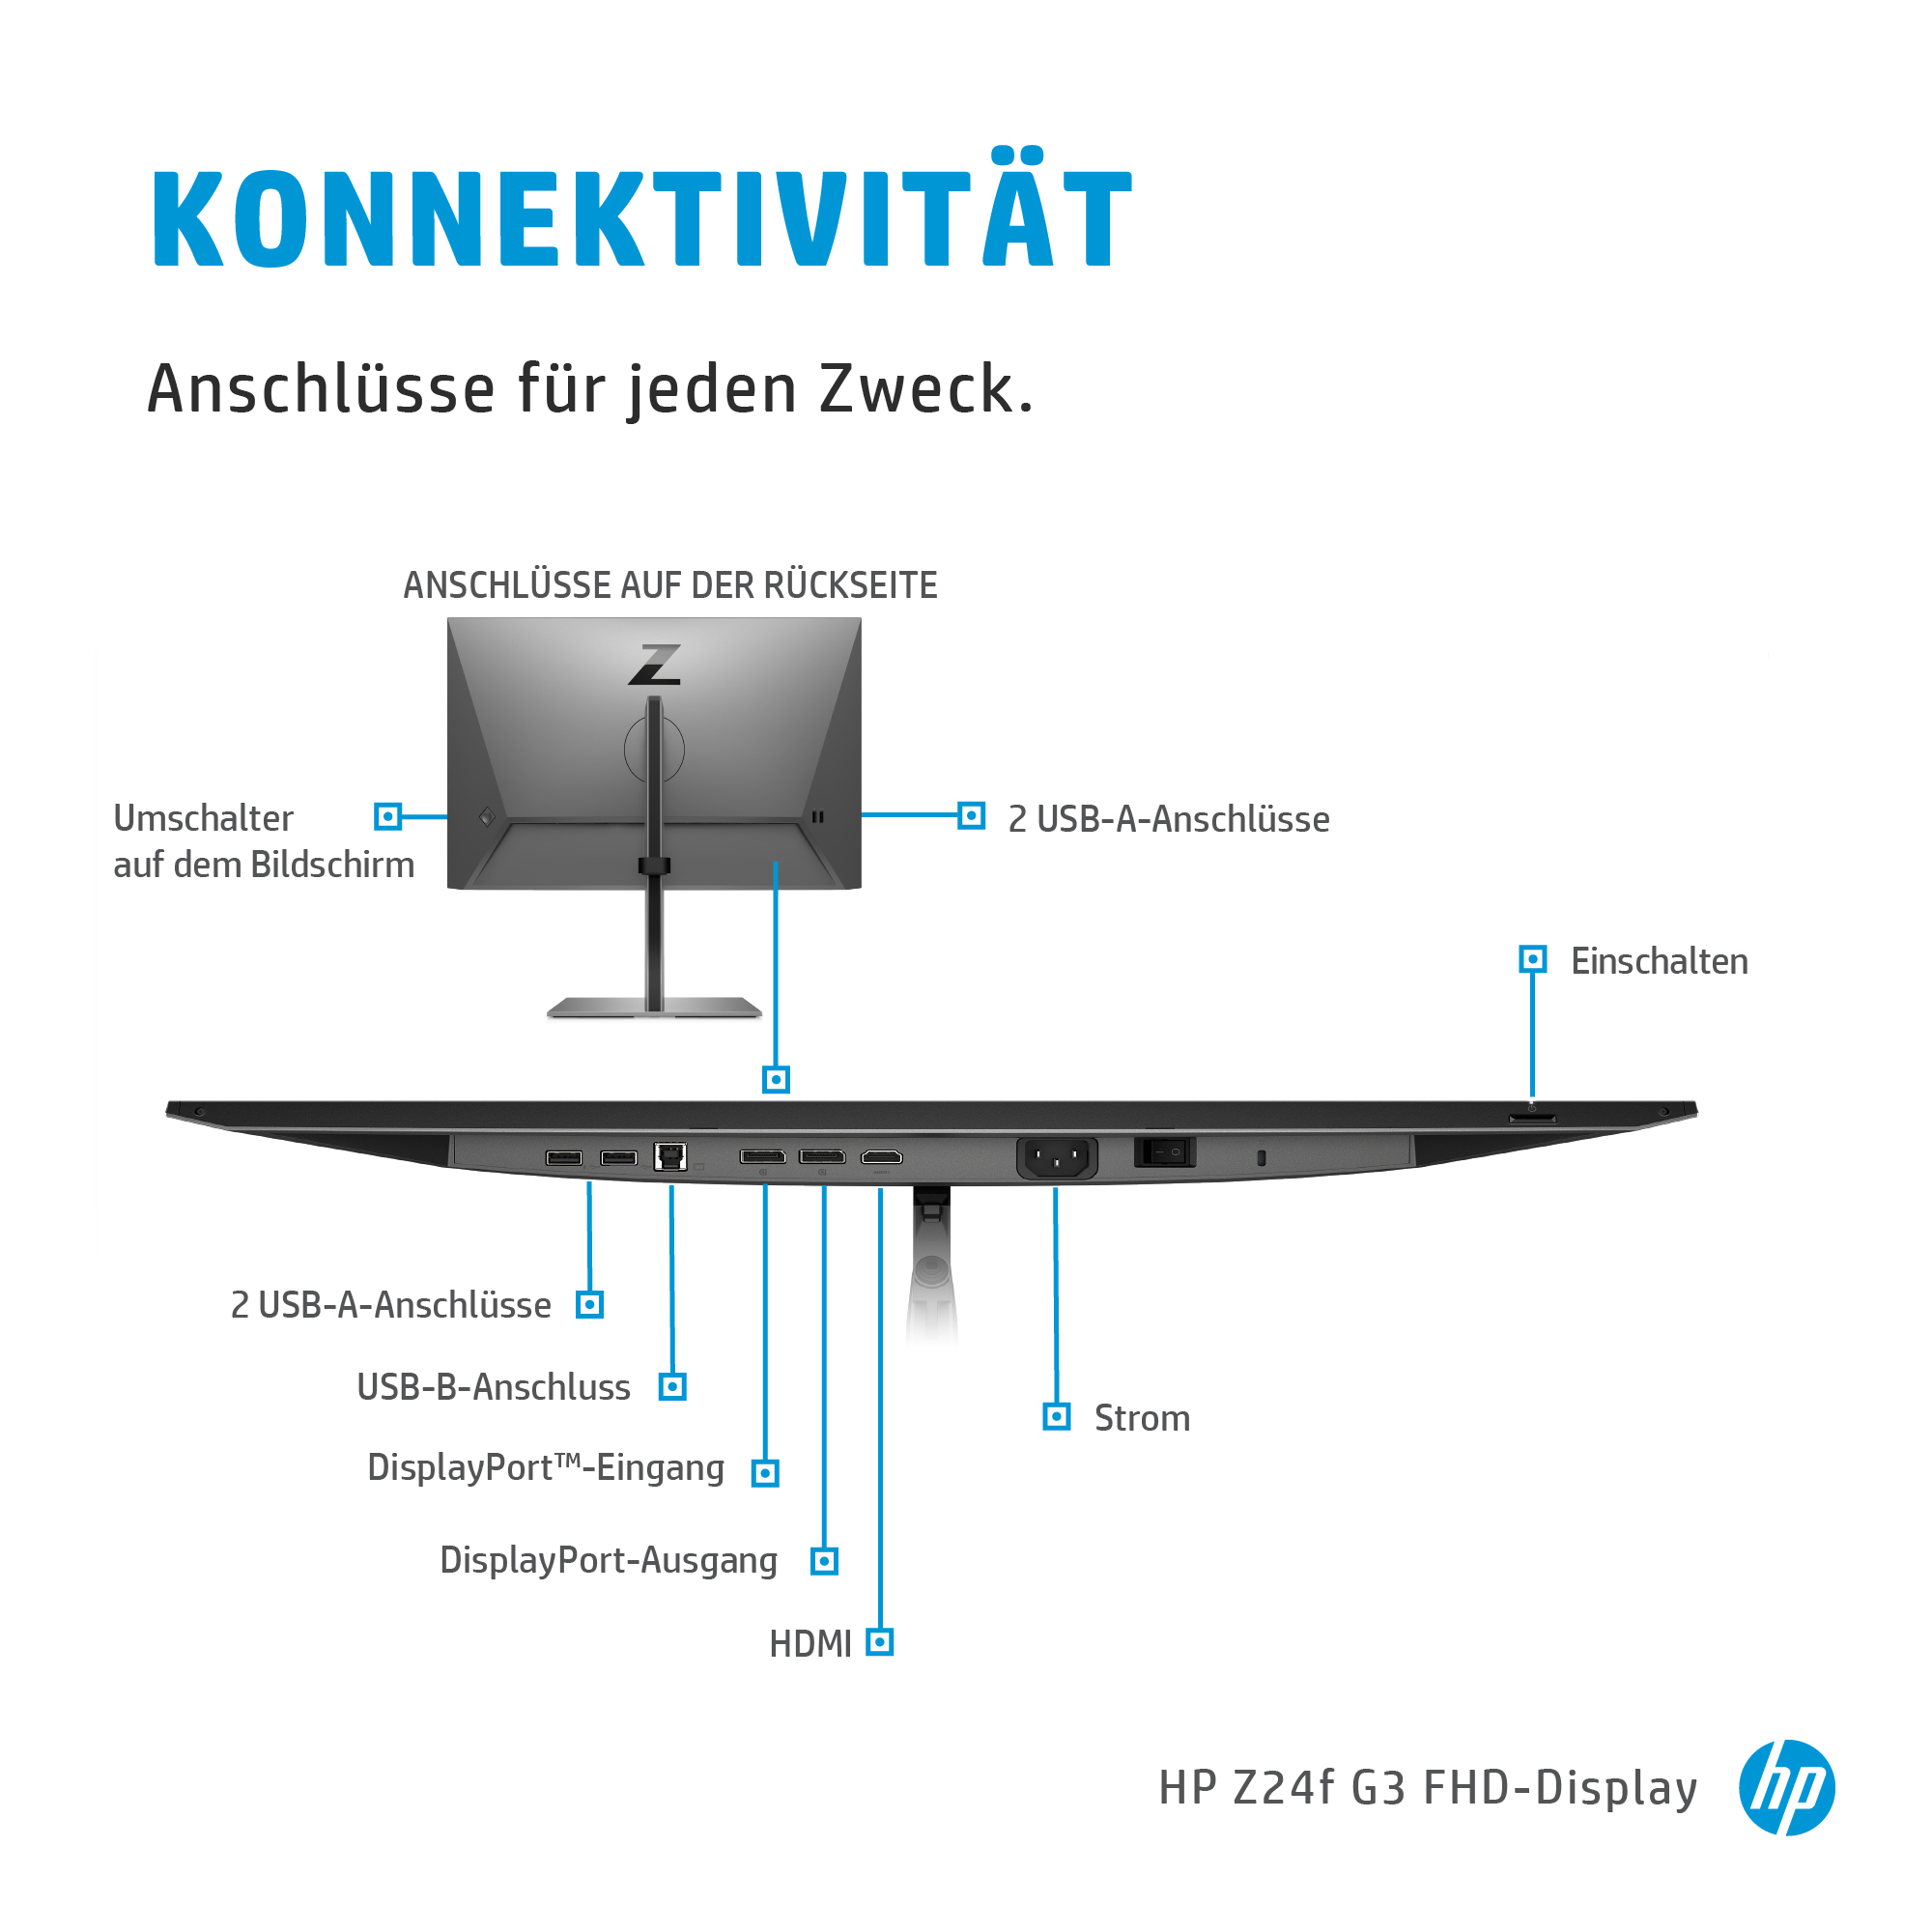 HP Z24f G3 FHD Display